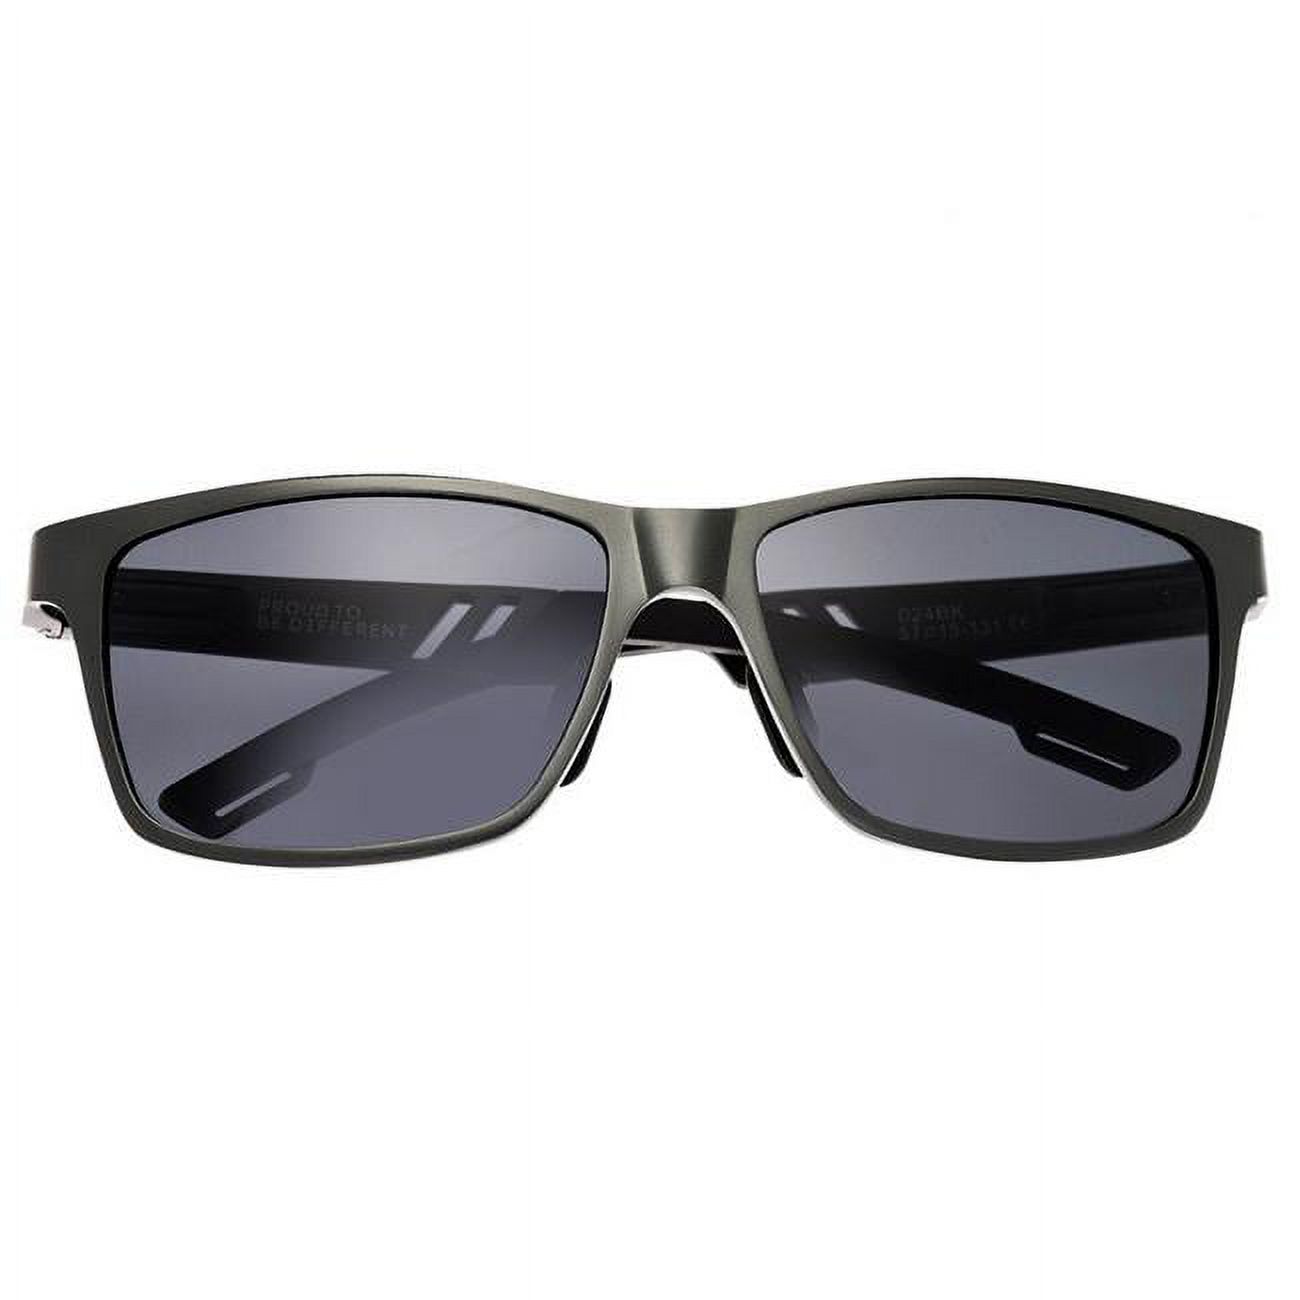 Breed Pyxis Men's Titanium Sunglasses - 100% UVA/UVB Prorection - Polarized Lens - image 1 of 2